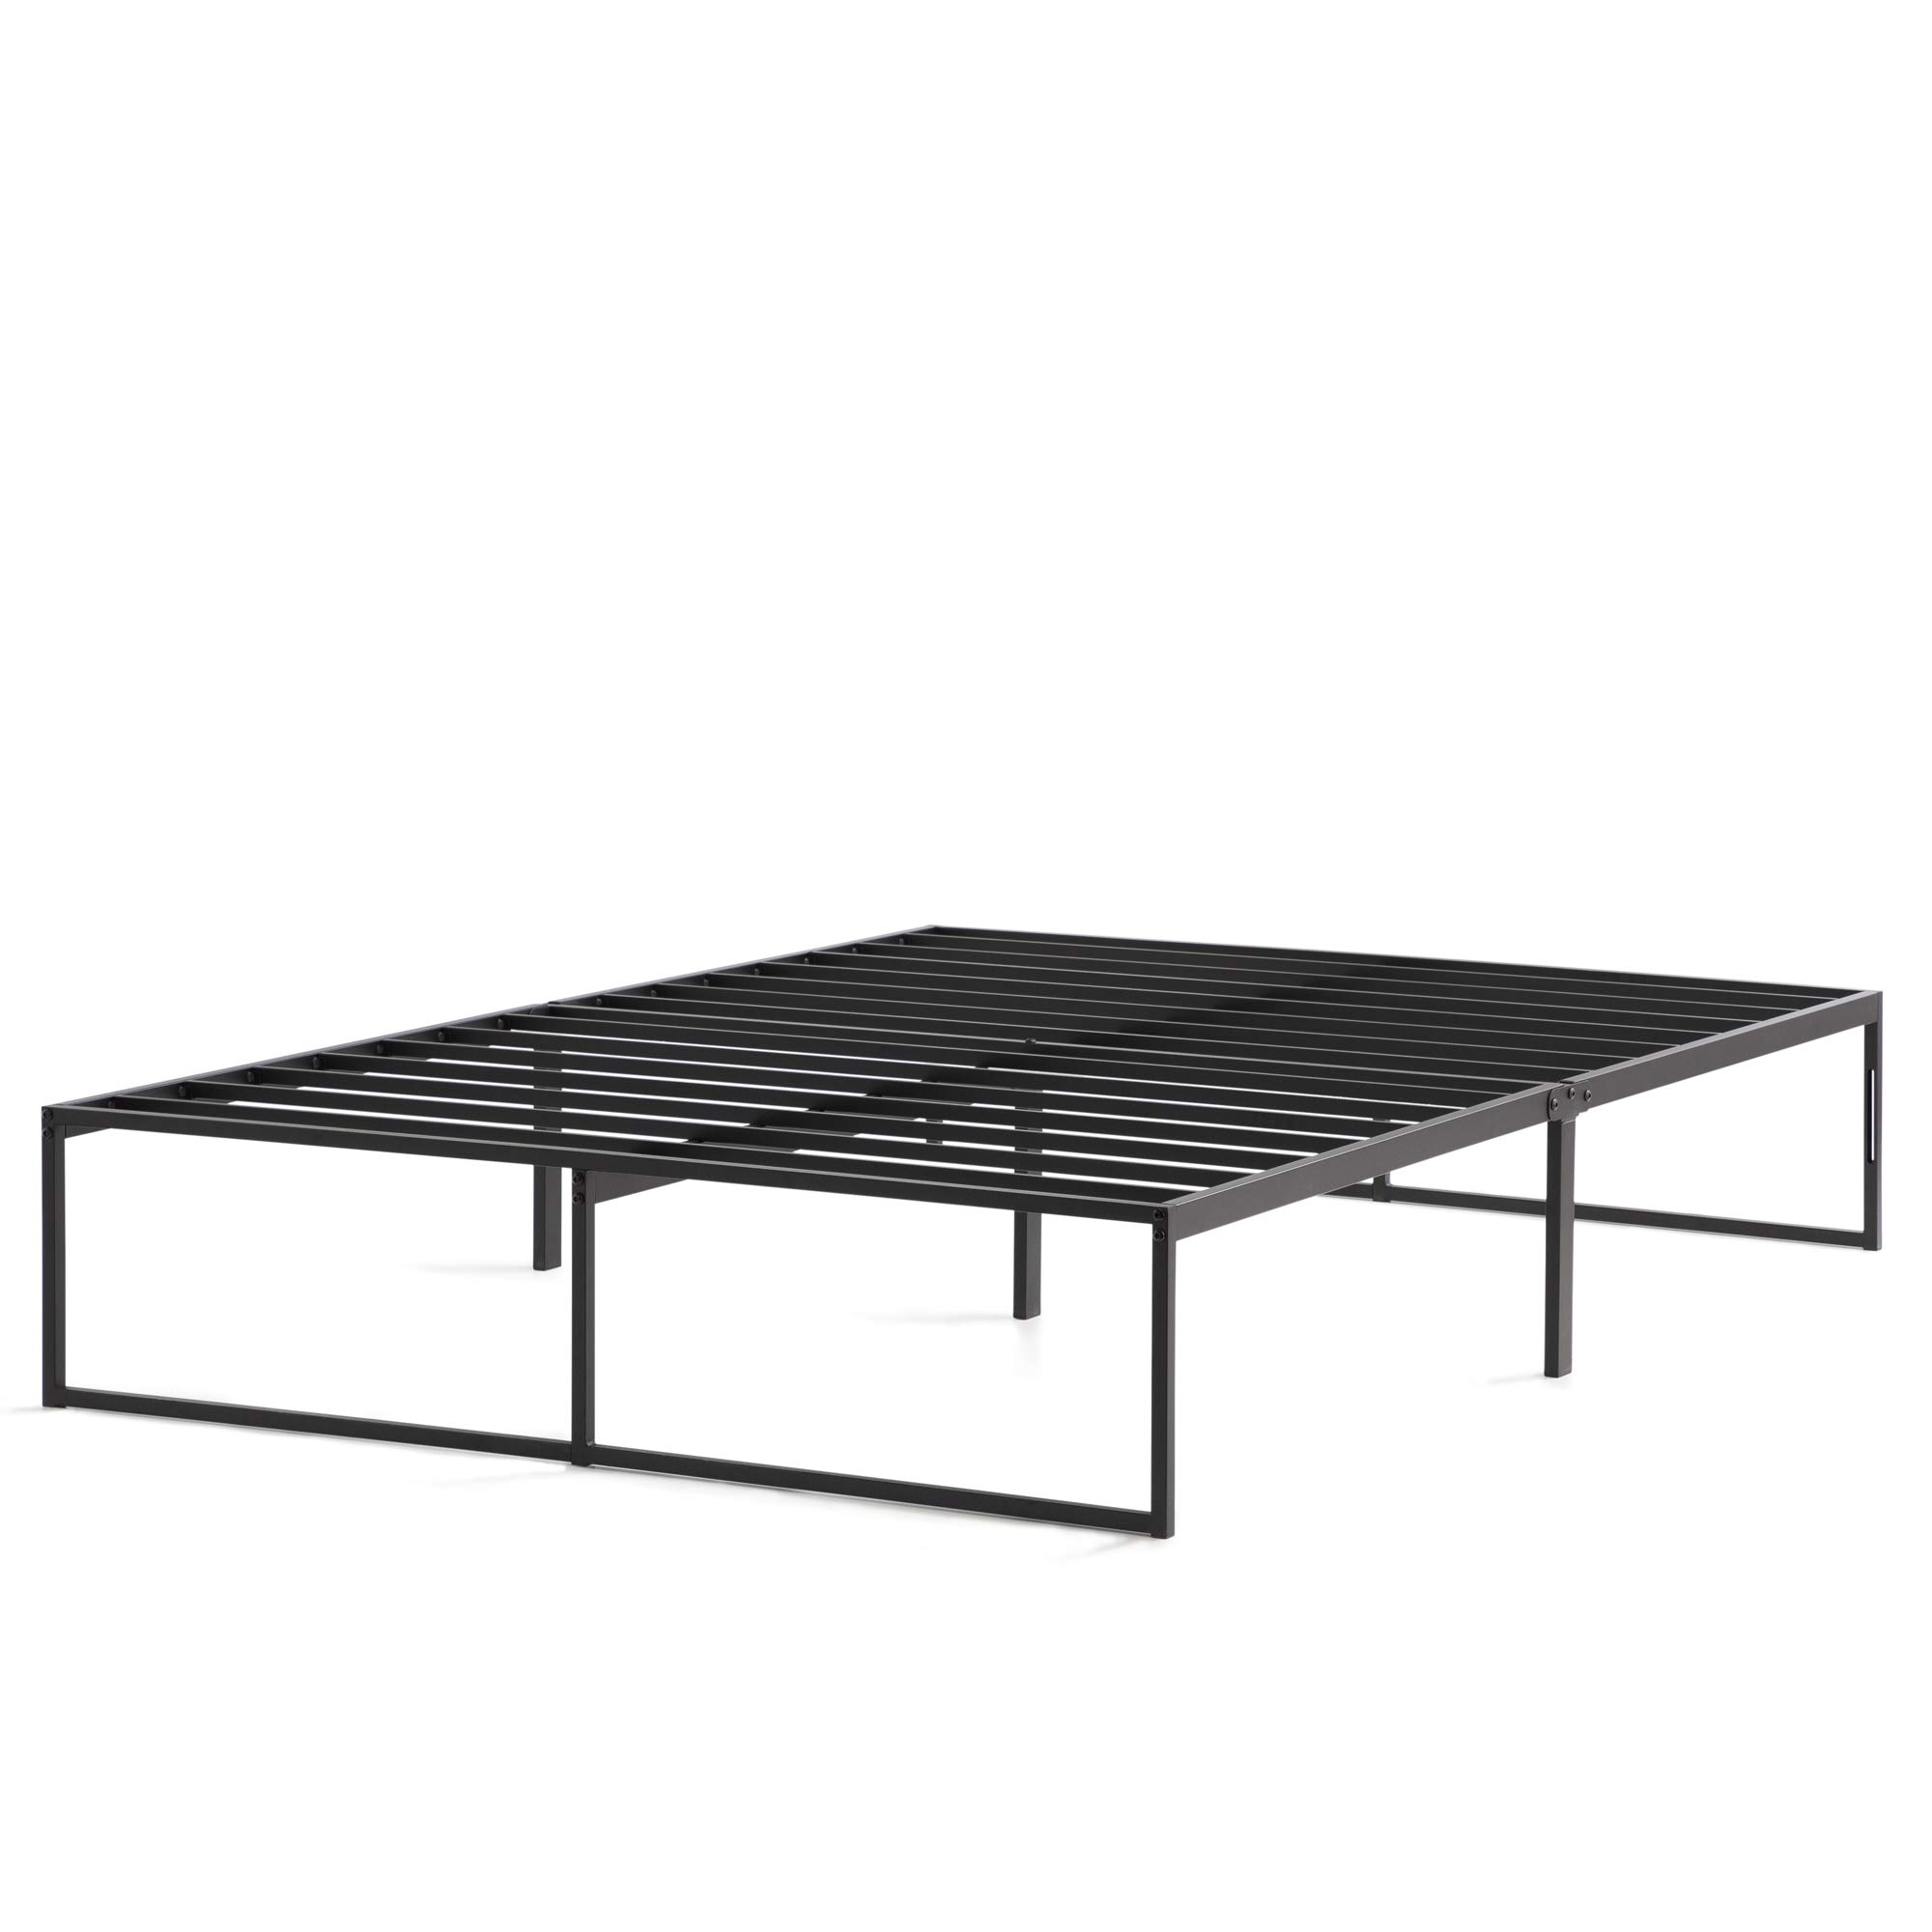 Linenspa 14 Inch Metal Platform Full Bed Frame with Storage Space Under Frame, Full Platform Bed Frame, No Box Spring Needed - $64.07 + F/S - Amazon